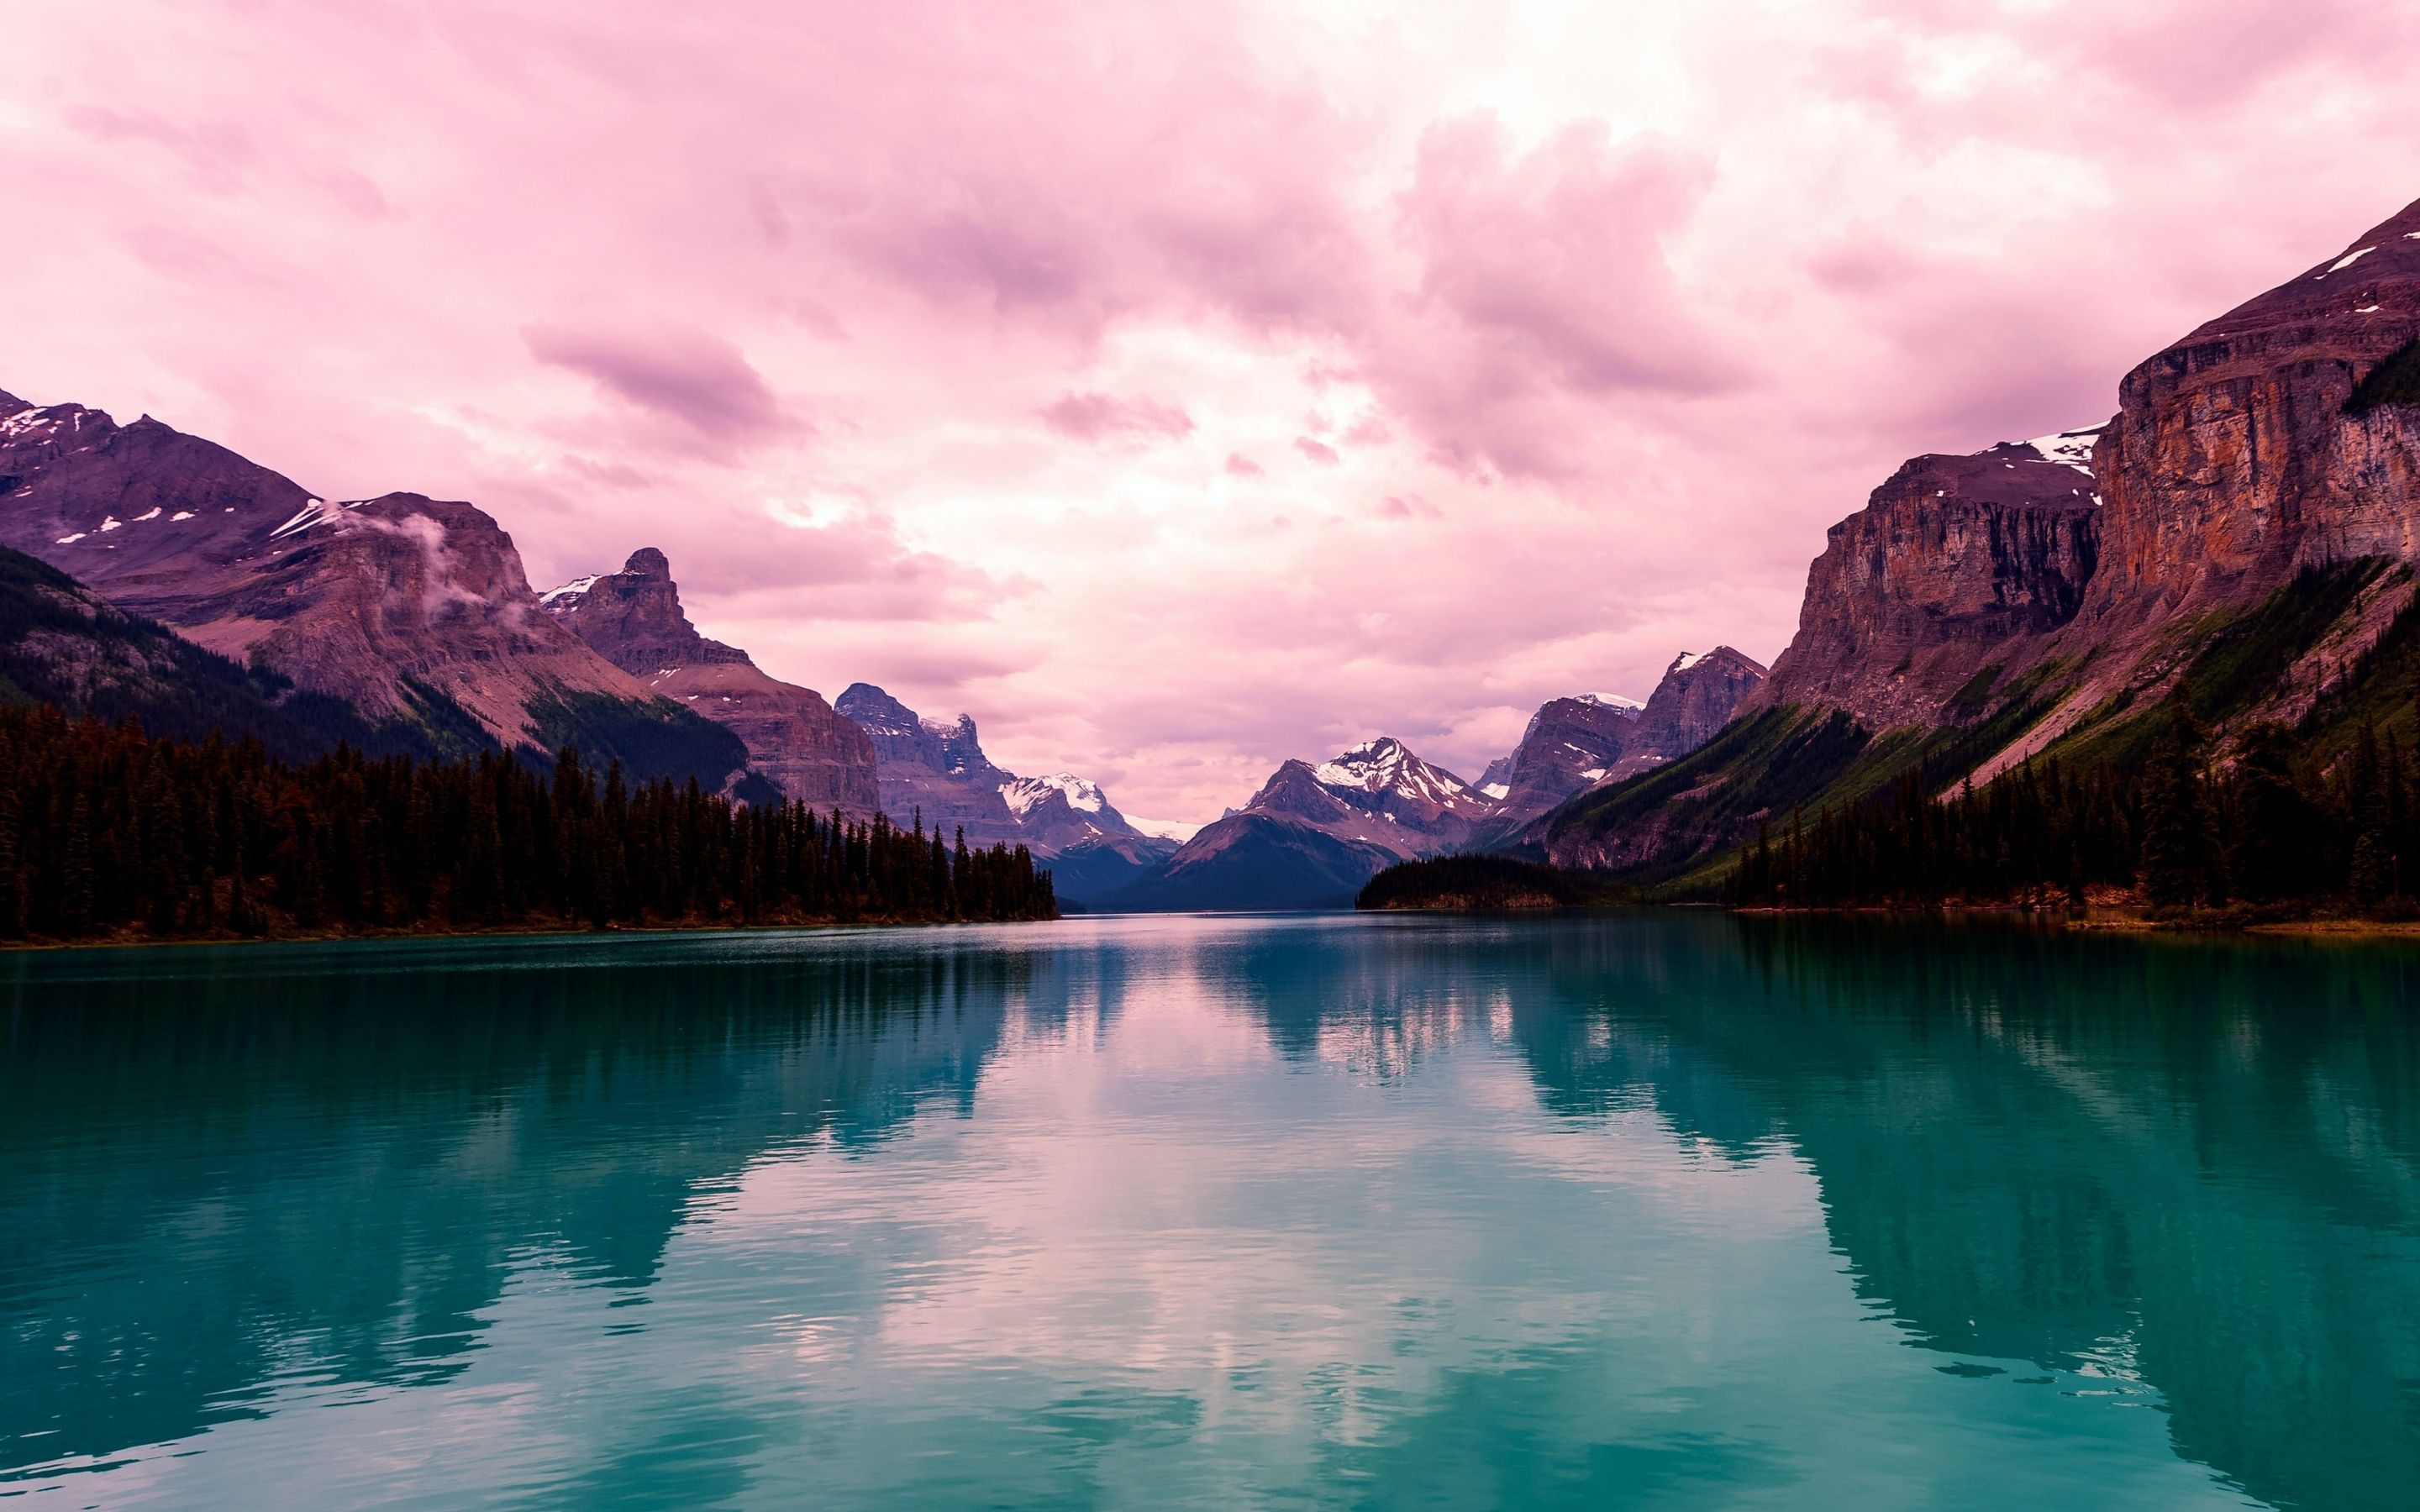  See Hintergrundbild 2880x1800. Maligne Lake Wallpaper 4K, Aesthetic, Canada, Purple sky